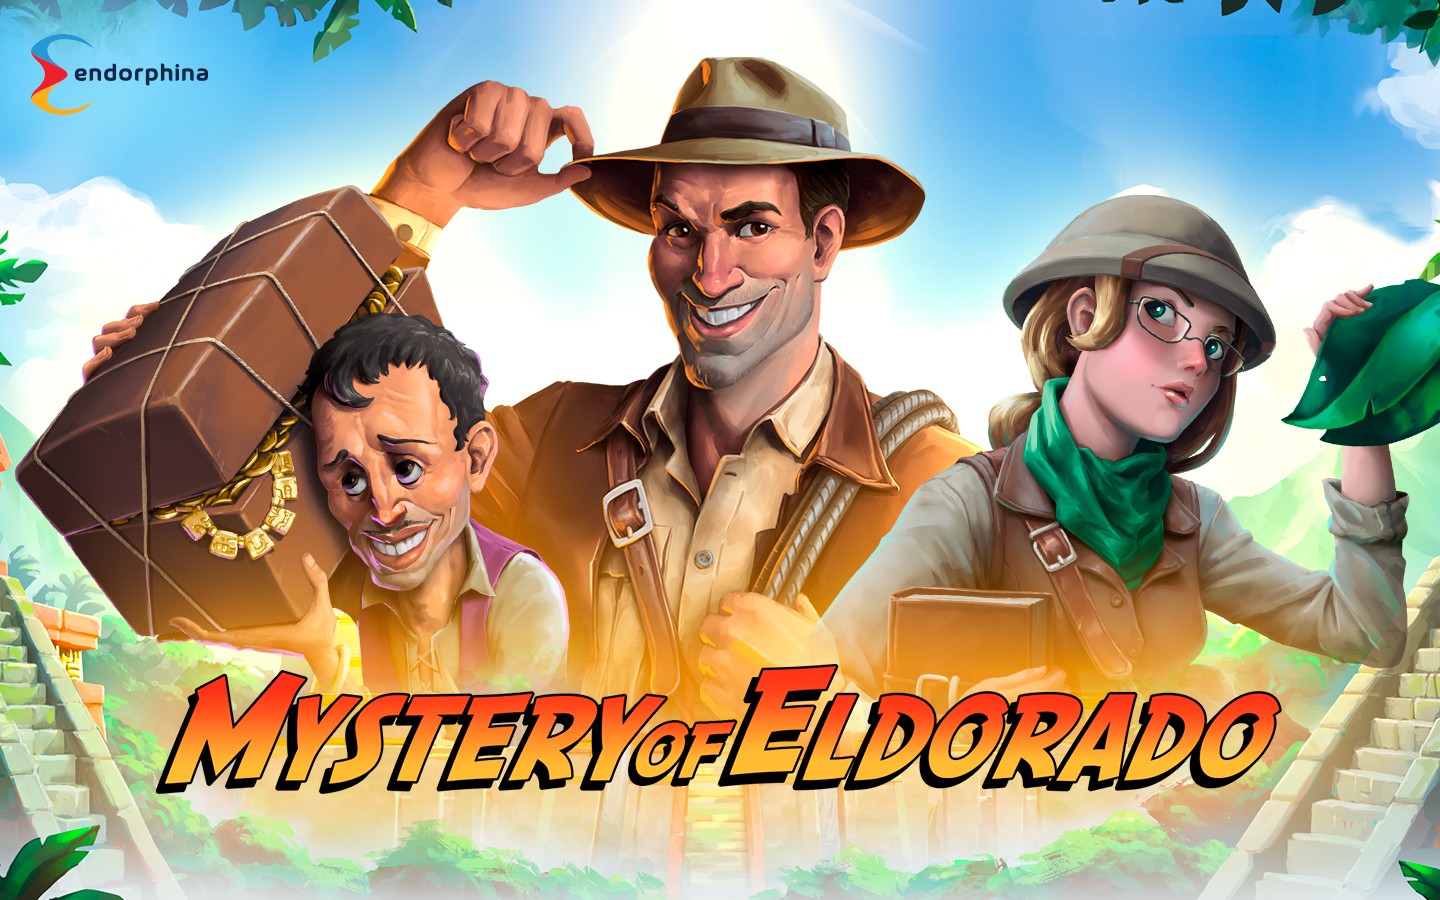 The Mystery of Eldorado